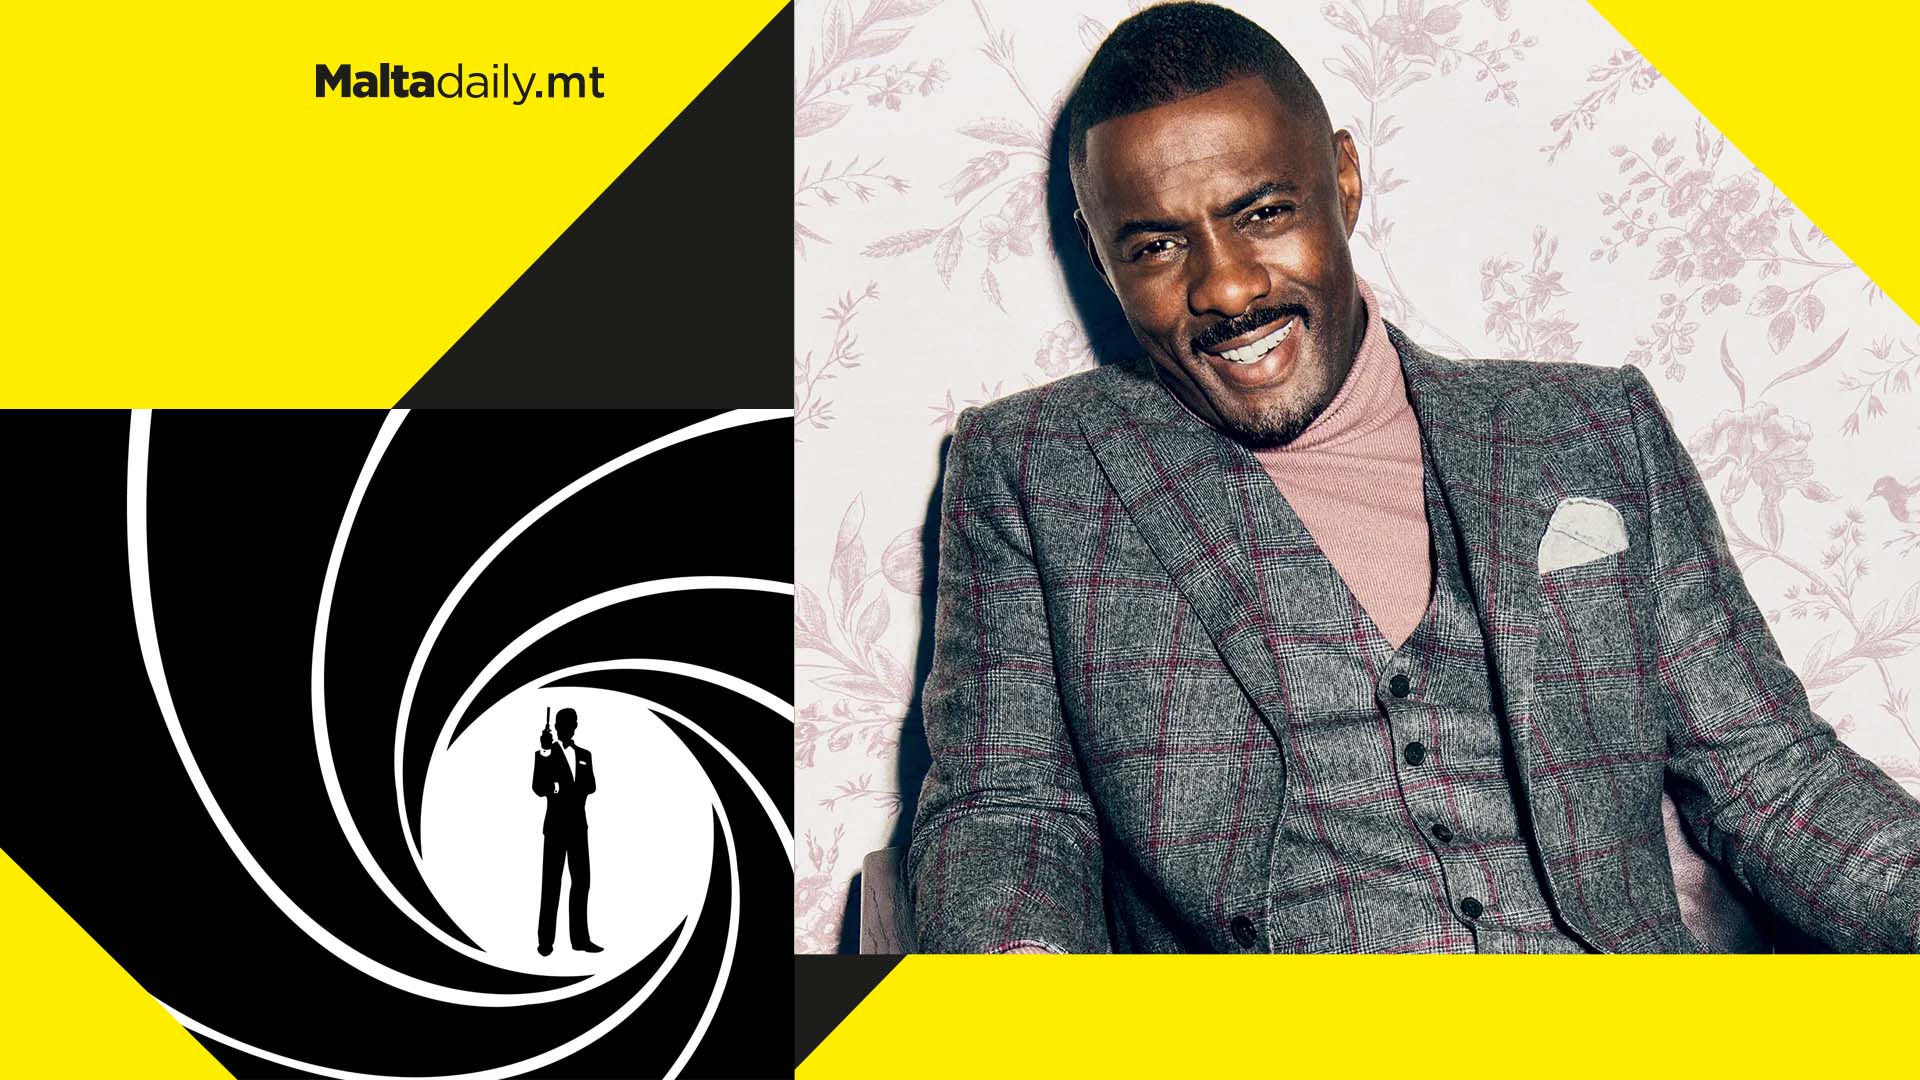 Idris Elba in talks to star in the next James Bond film, reports say